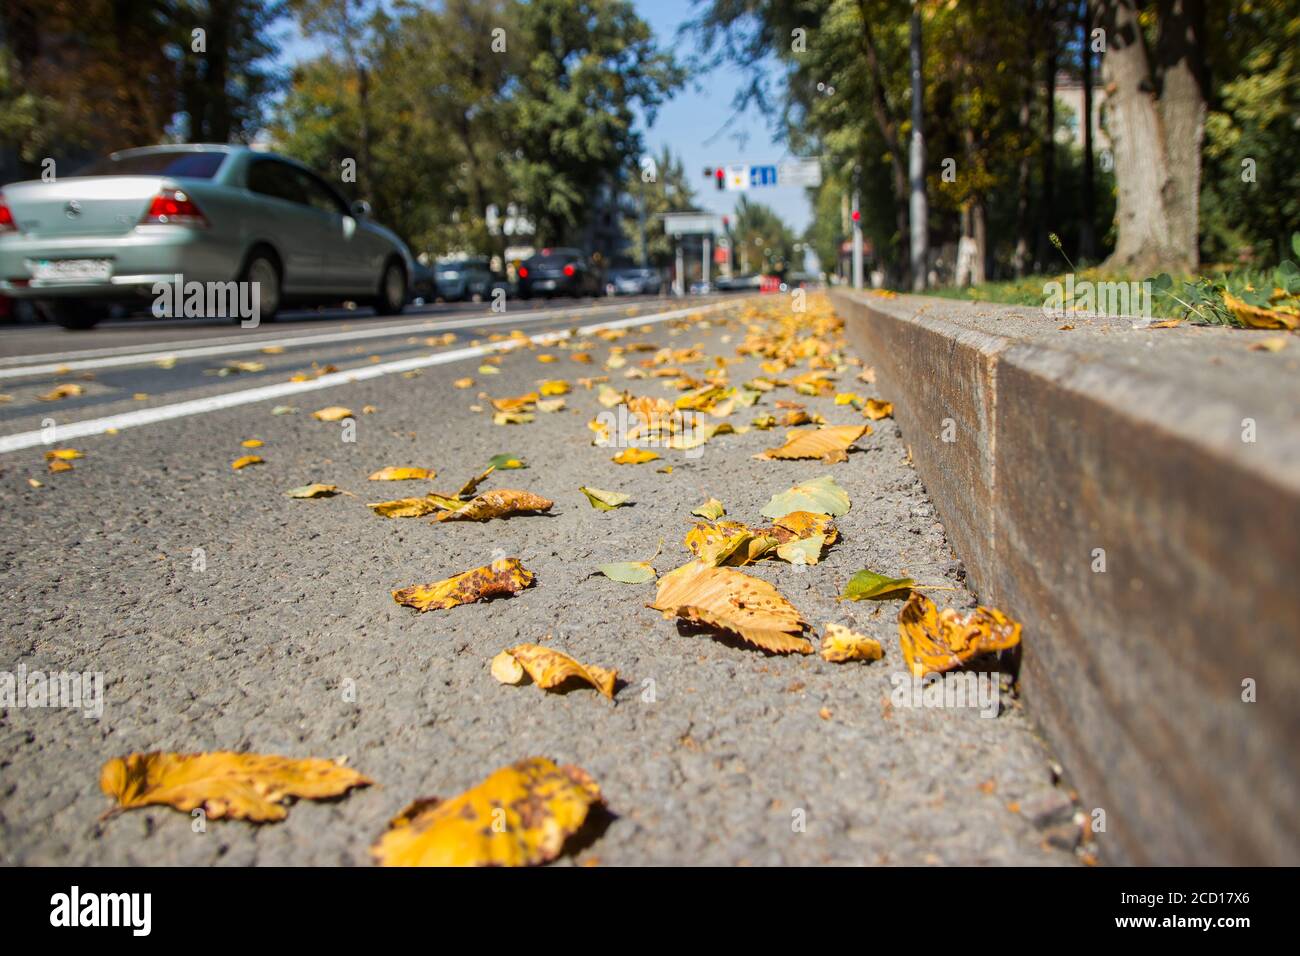 Yellow Fallen Leaves On Asphalt Golden Autumn Street Last Sunny Day Weather Beautiful Comfortable Safety City Life Stock Photo Alamy